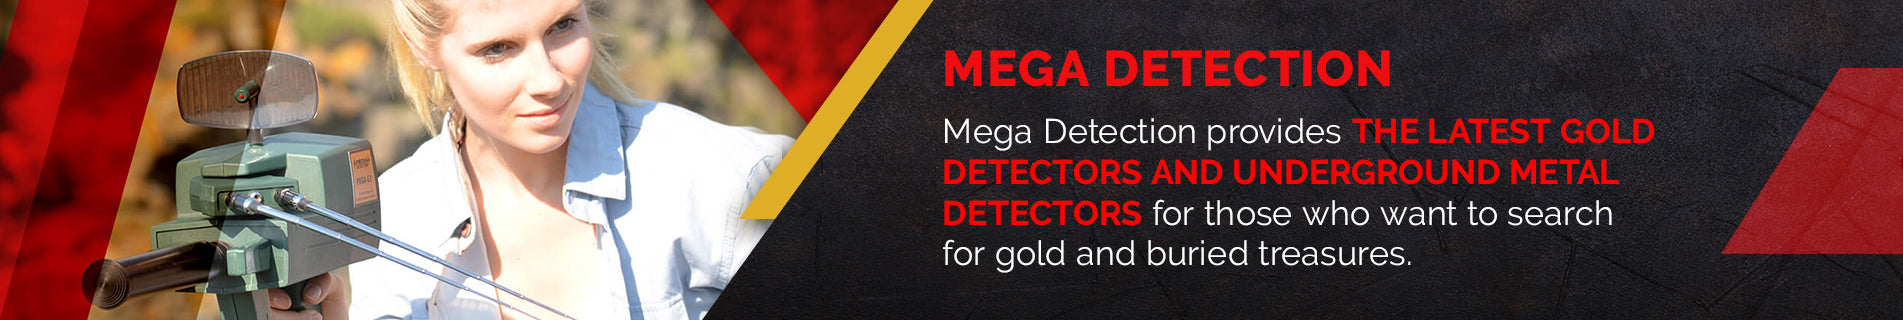 Mega Detection Geolocator Metal Detectors | Free USA Shipping